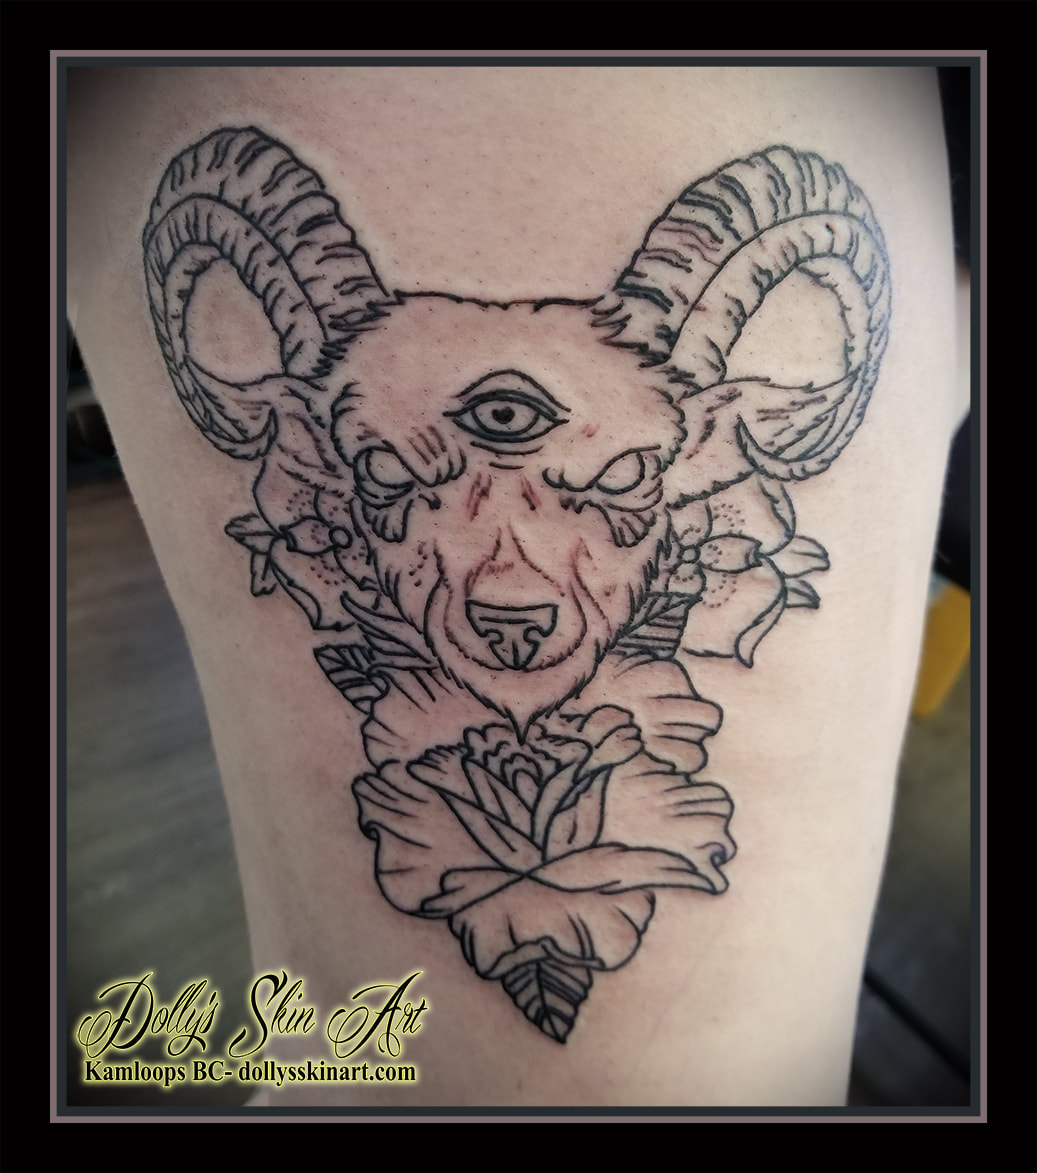 goat head tattoo roses third eye outline linework blackwork black thigh tattoo kamloops dolly's skin art